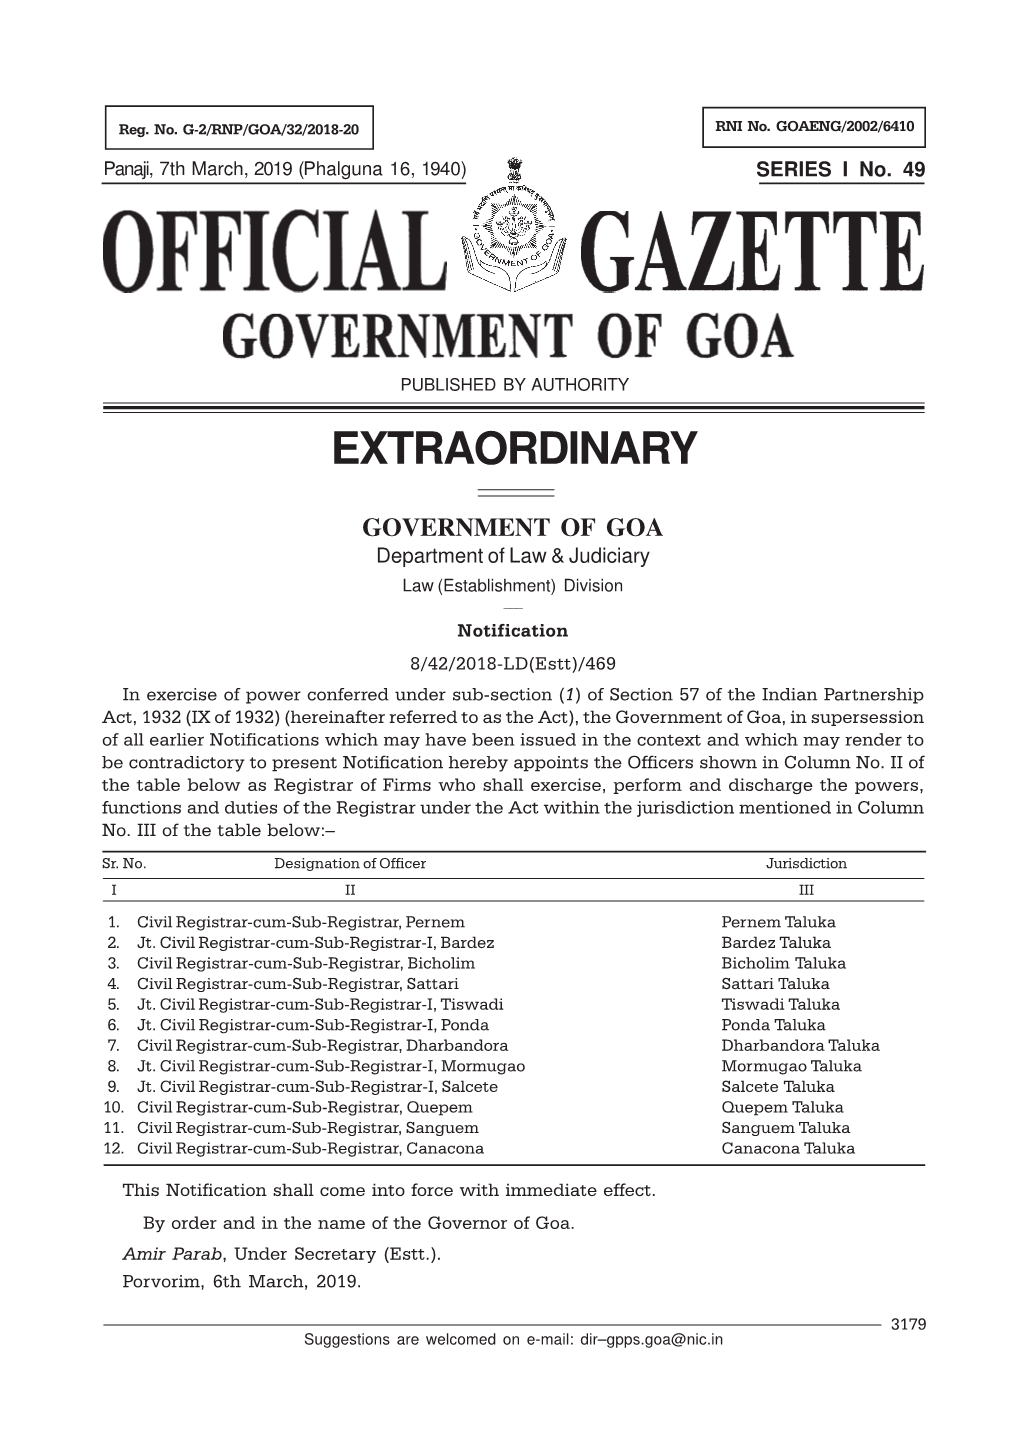 GOVERNMENT of GOA Department of Law & Judiciary Law (Establishment) Division